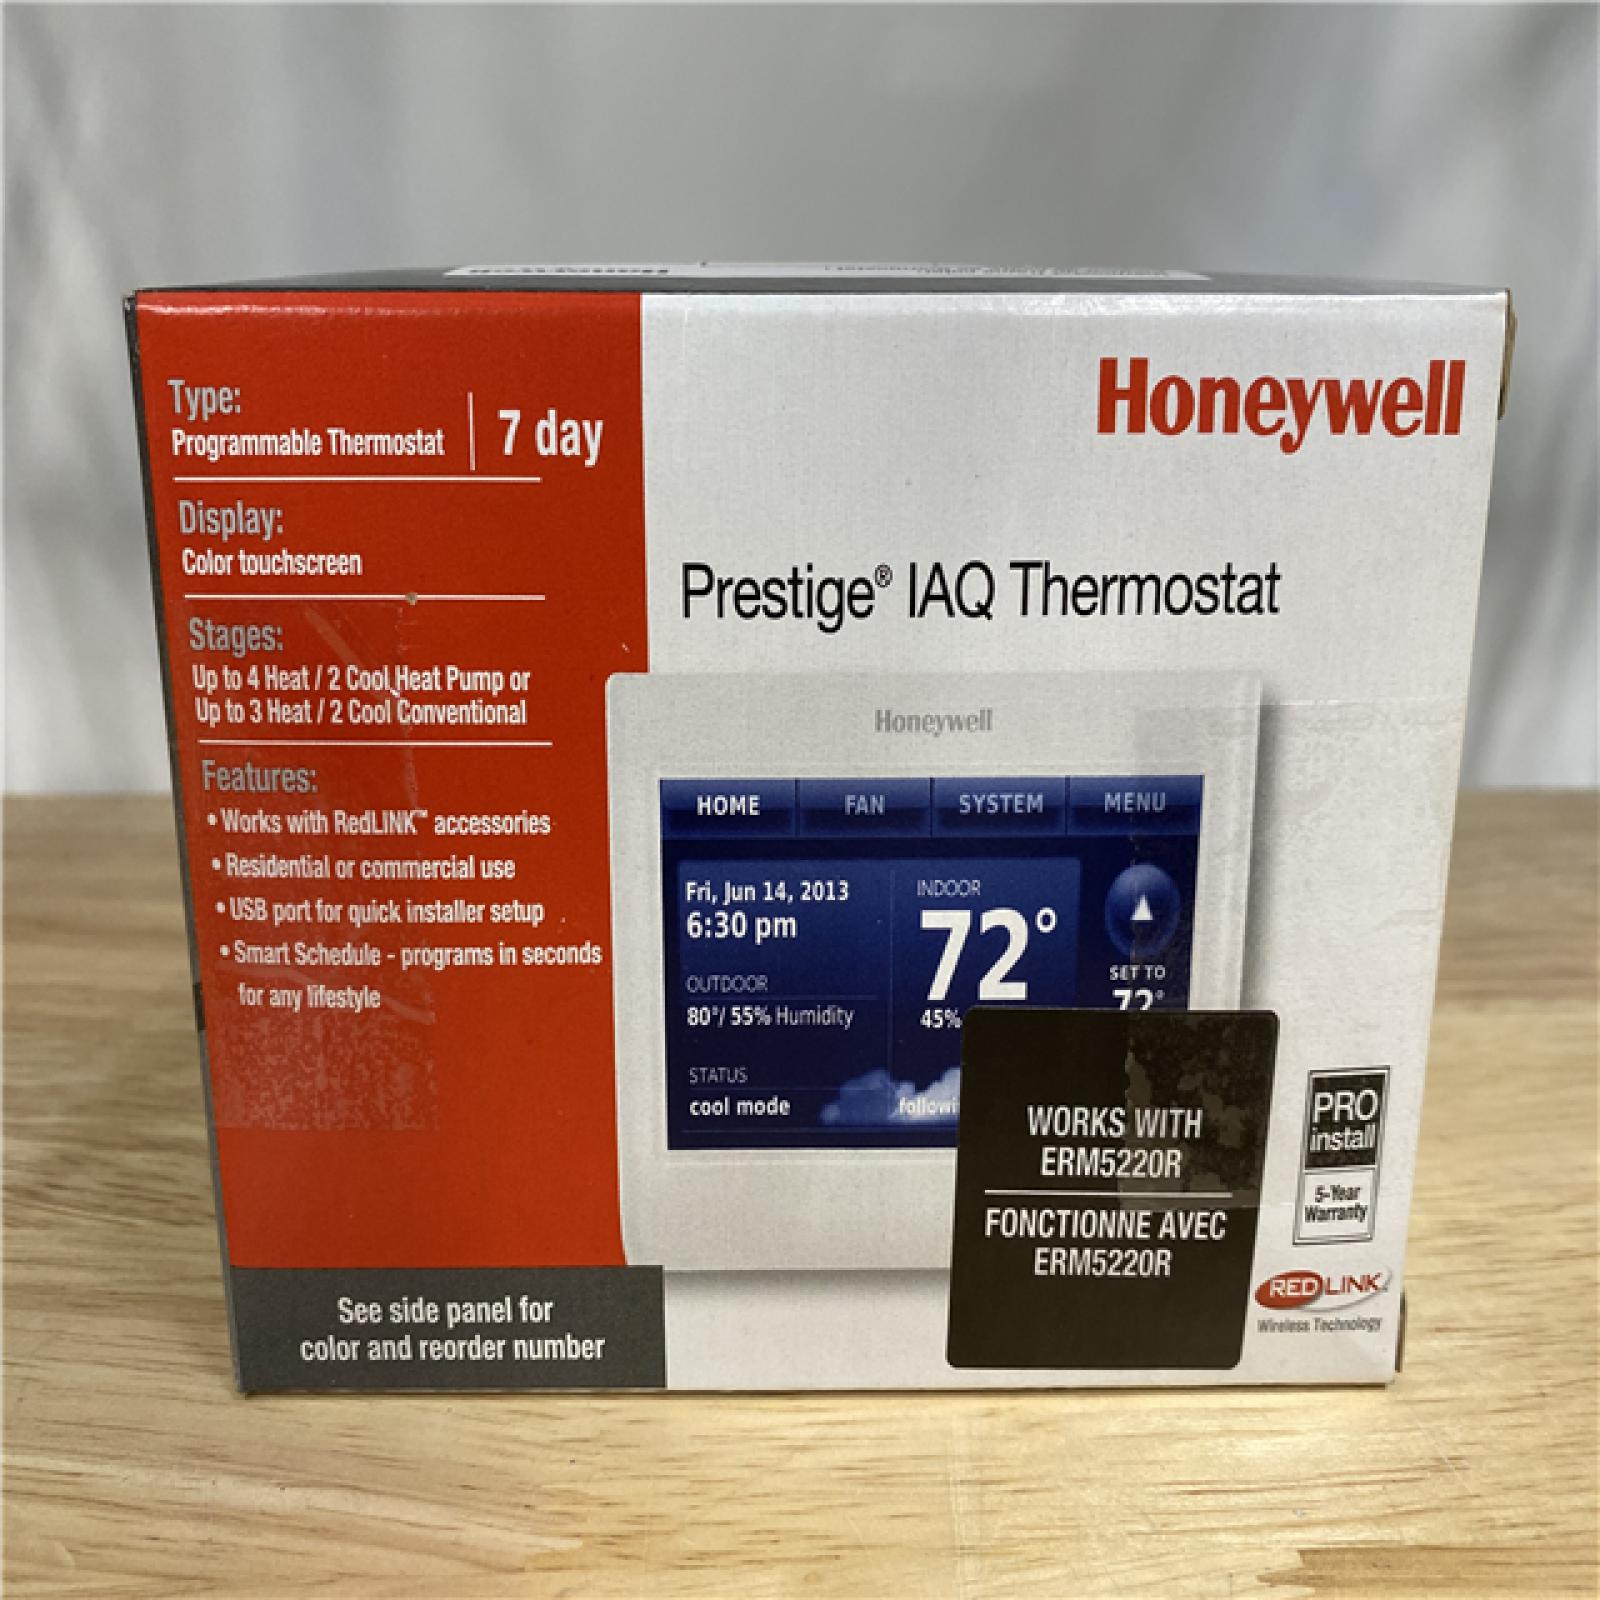 DALLAS LOCATION - New Honeywell Prestige 2-Wire IAQ Thermostat with RedLINK Technology